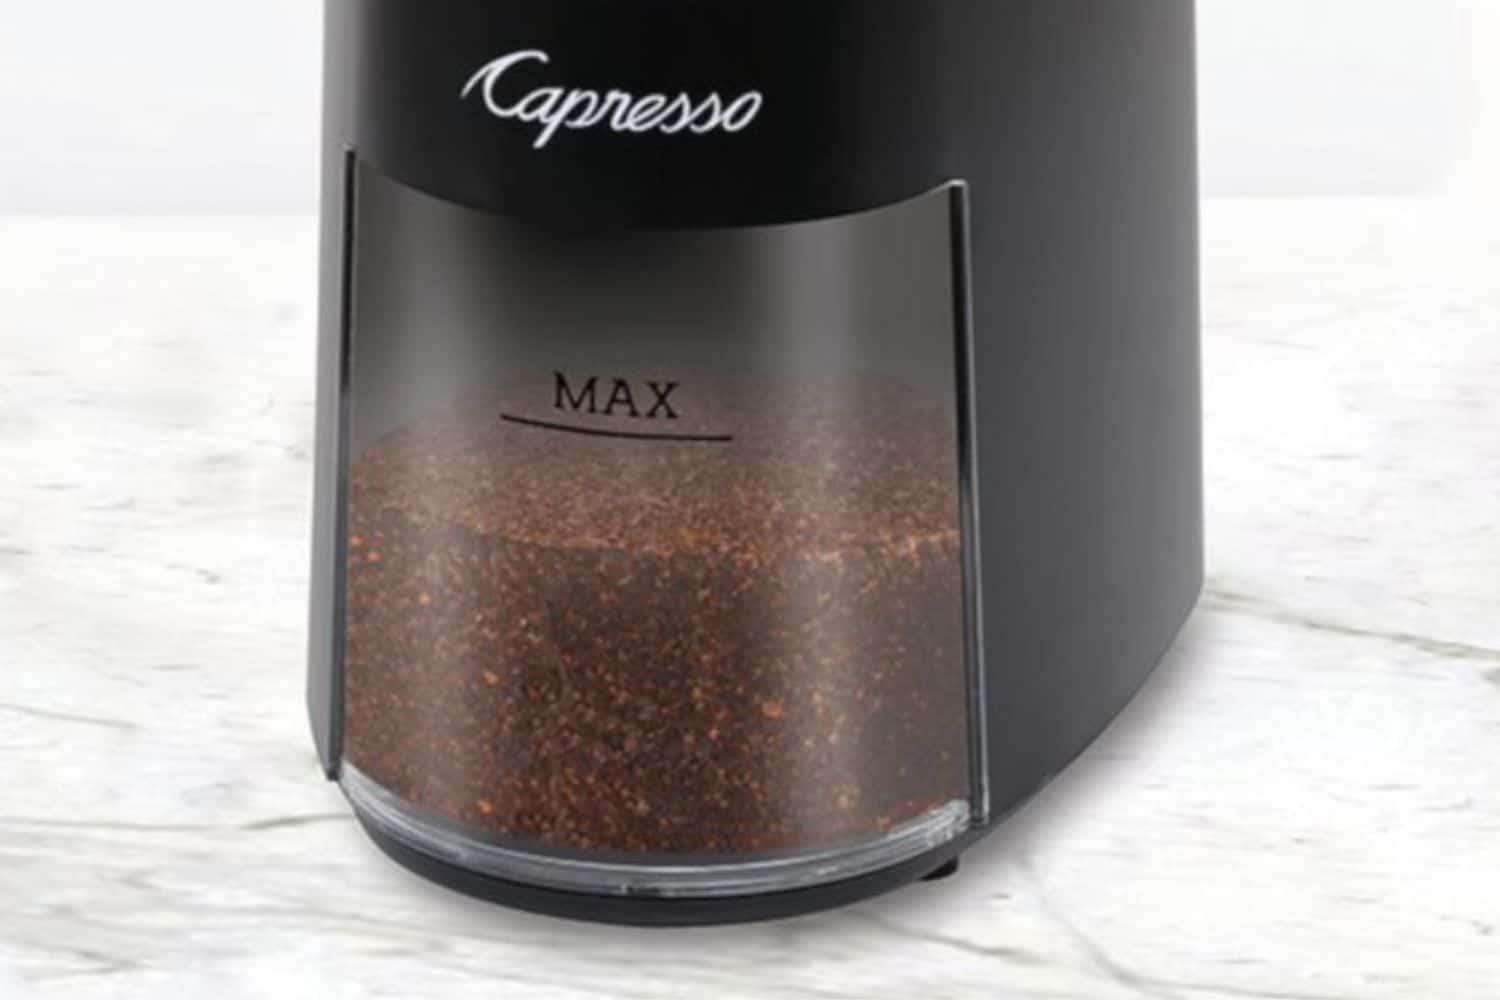 Capresso Infinity Plus Conical Burr Coffee Grinder